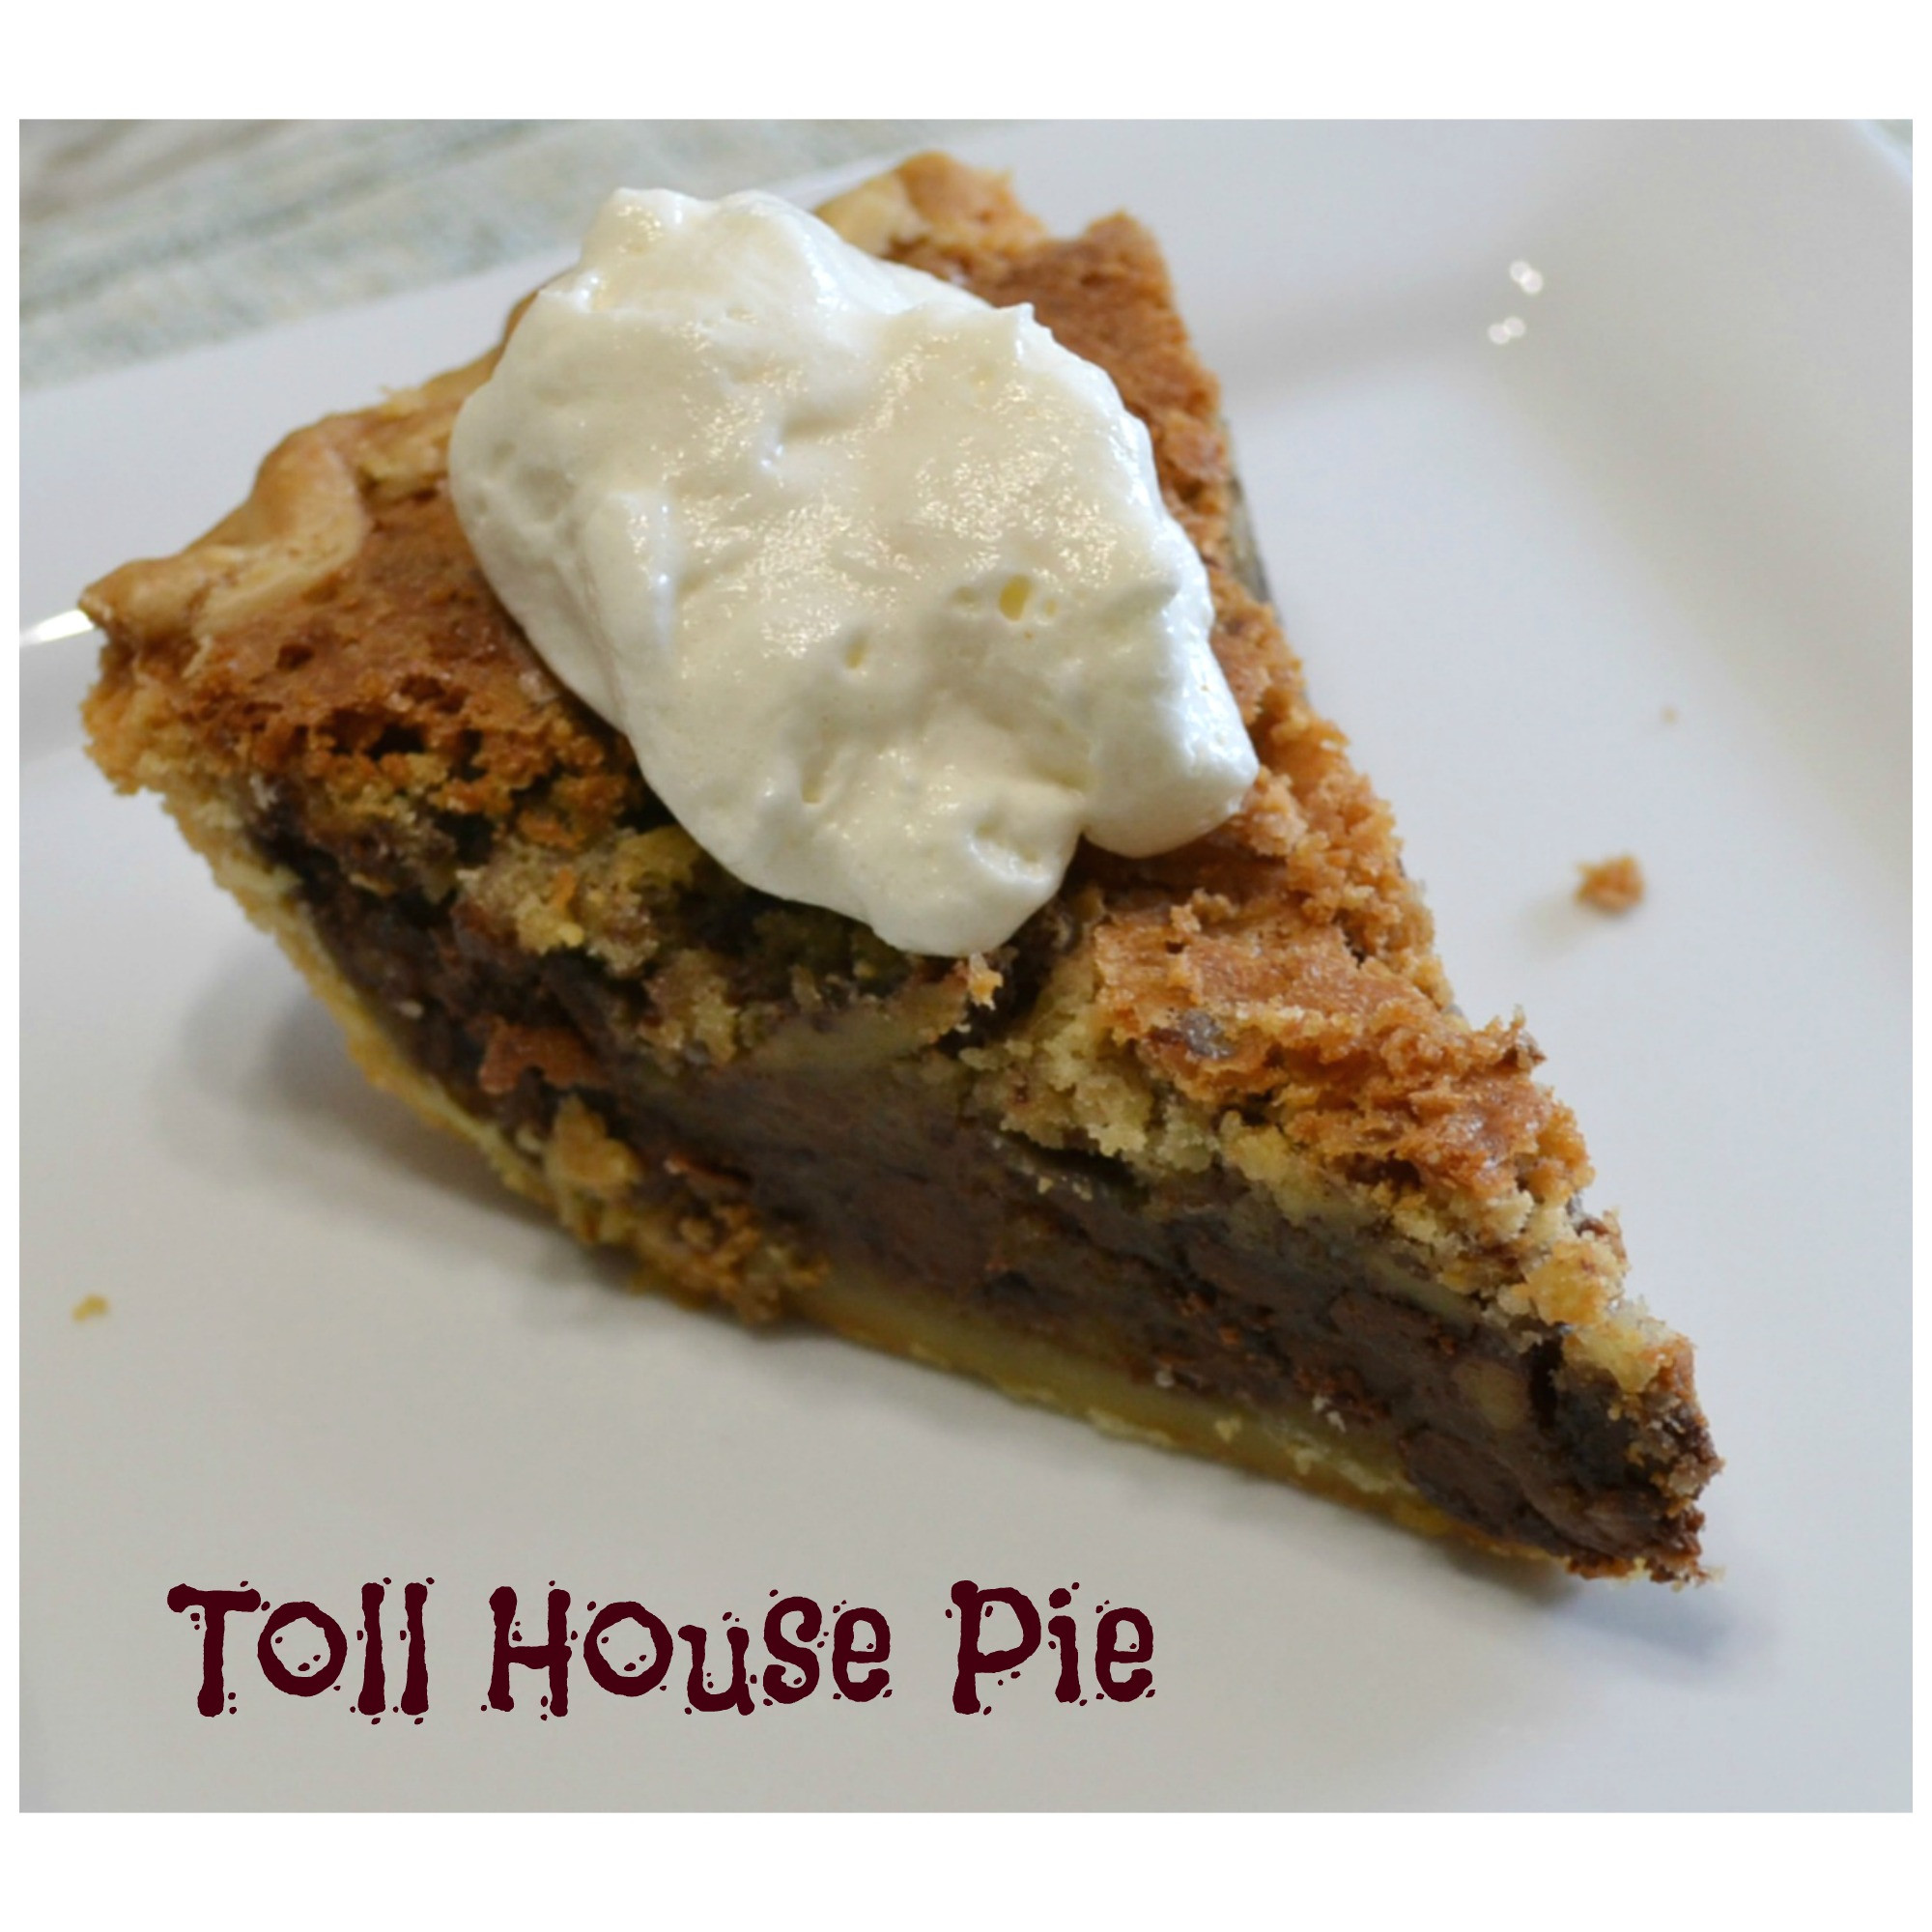 Tollhouse Pie Recipes
 TOLL HOUSE PIE A RETRO DESSERT RECIPE GRANDMA HONEY S HOUSE